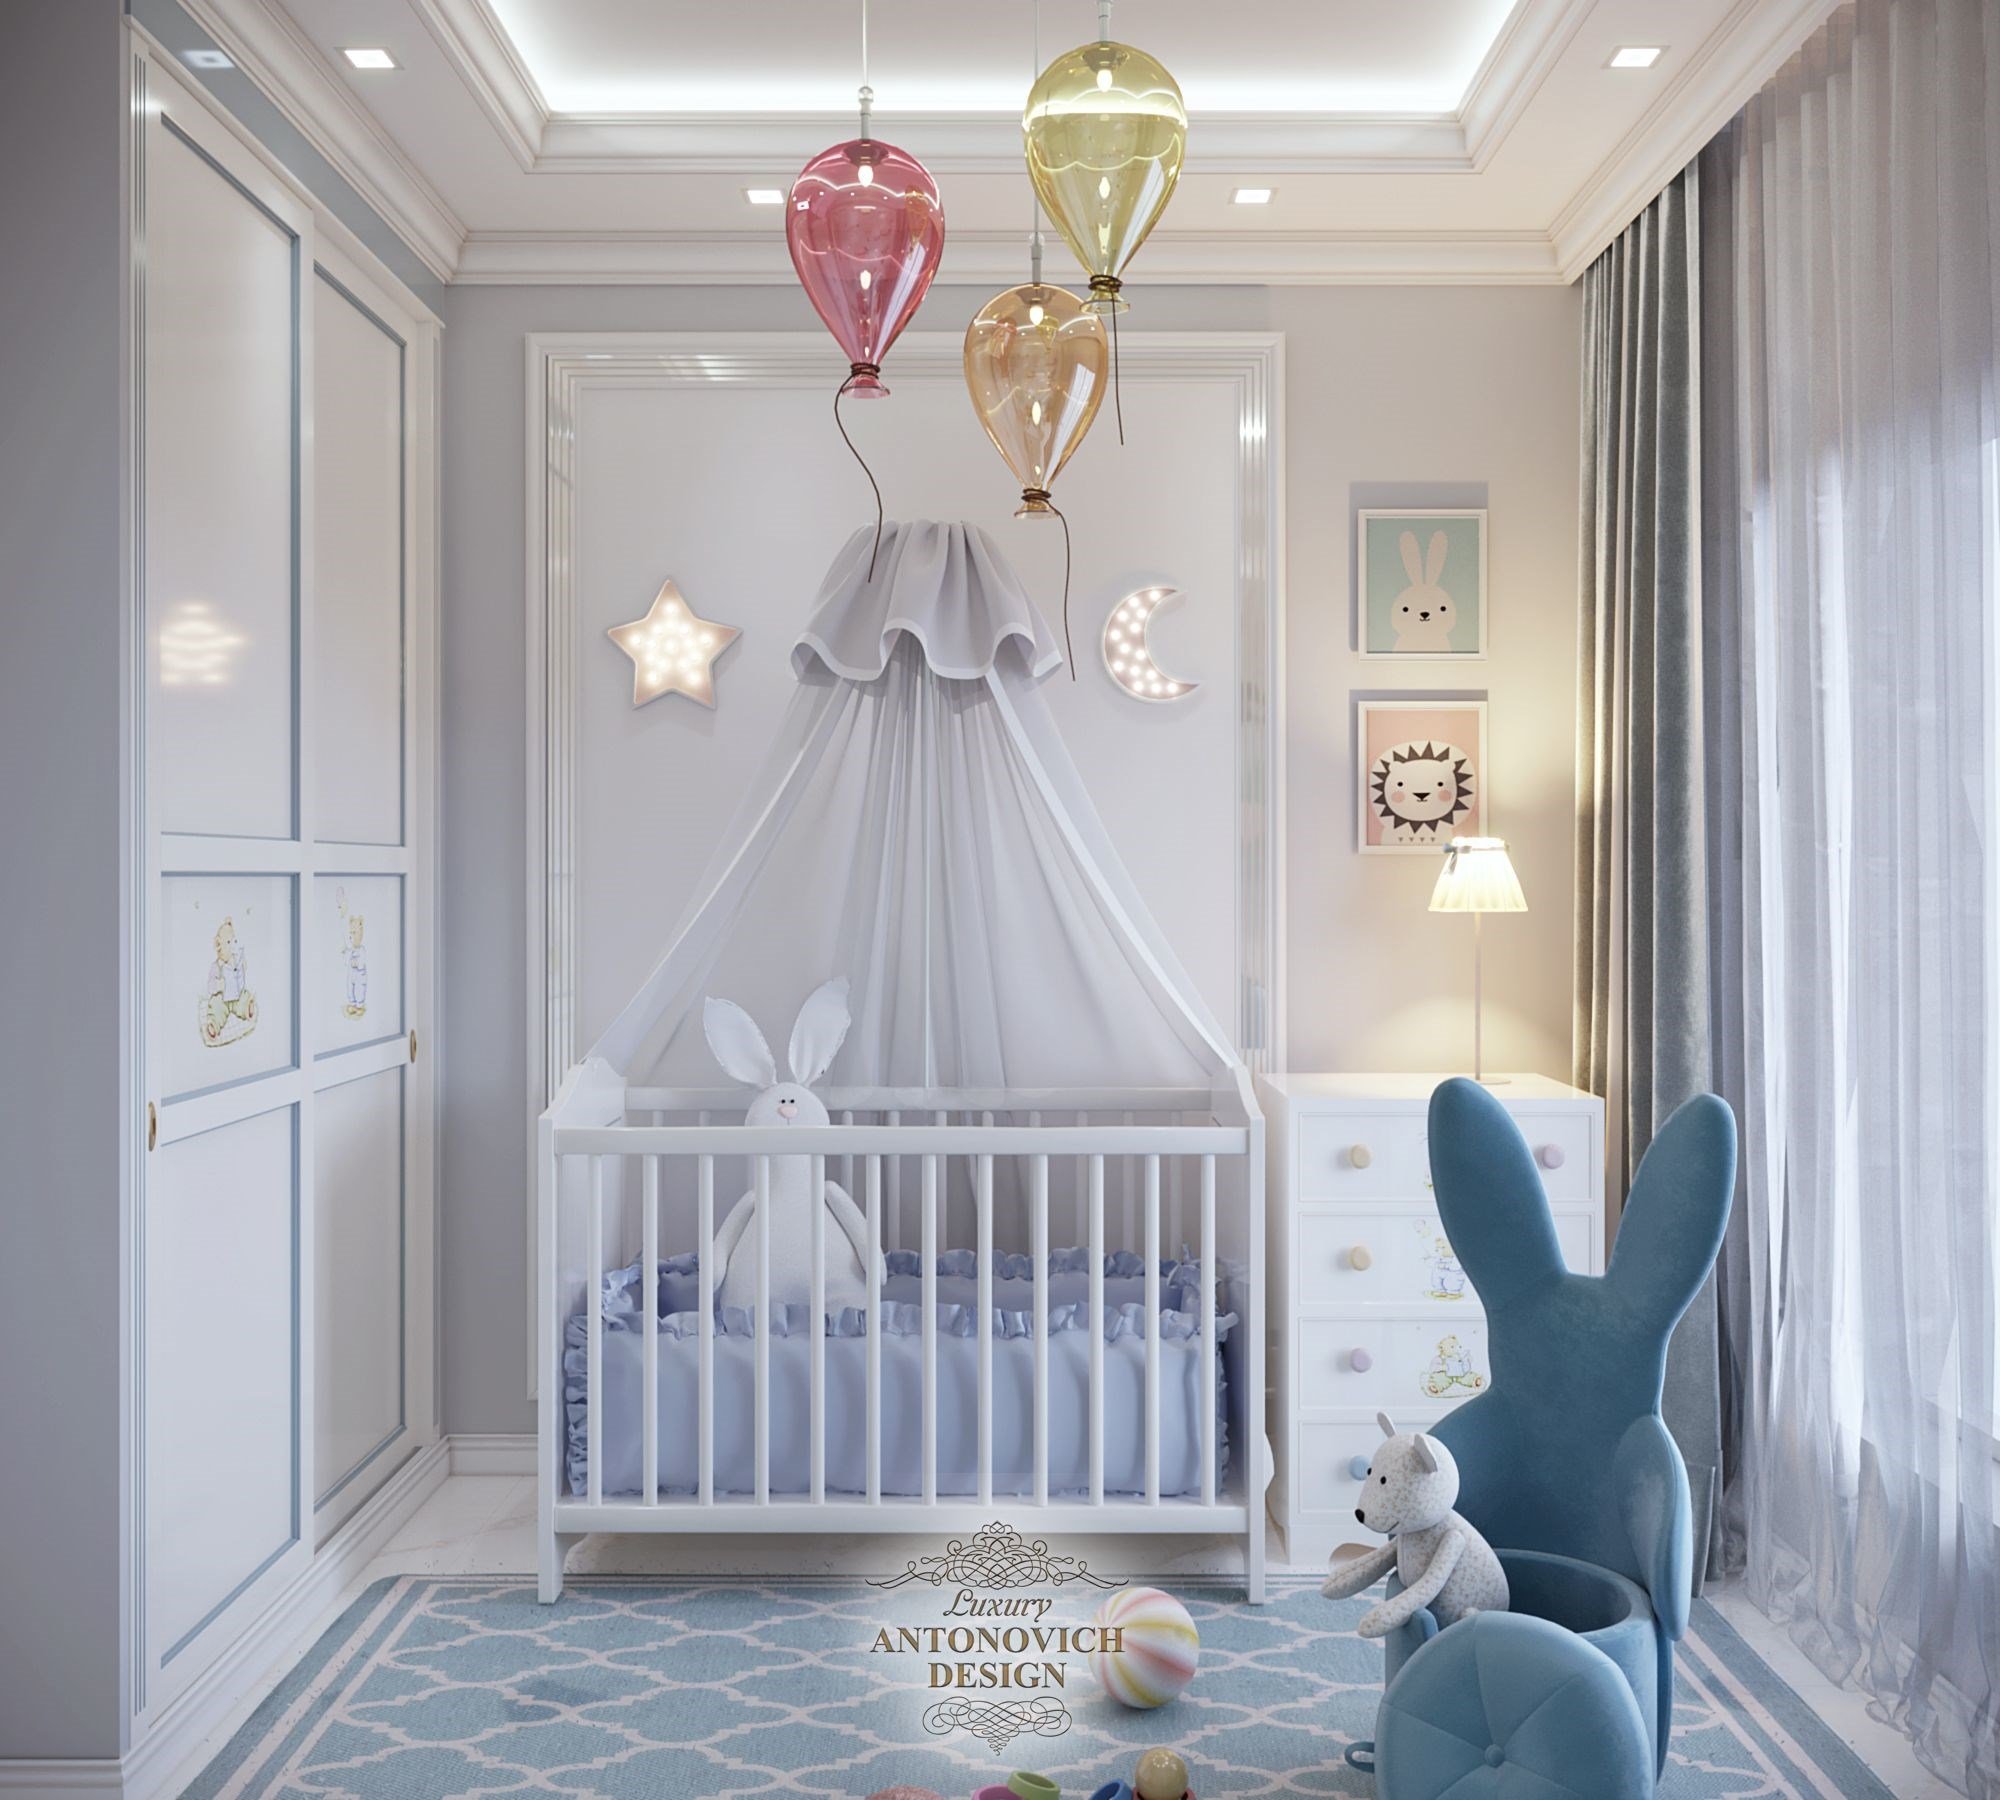 8 кімната немовляти 2_antonovich-design